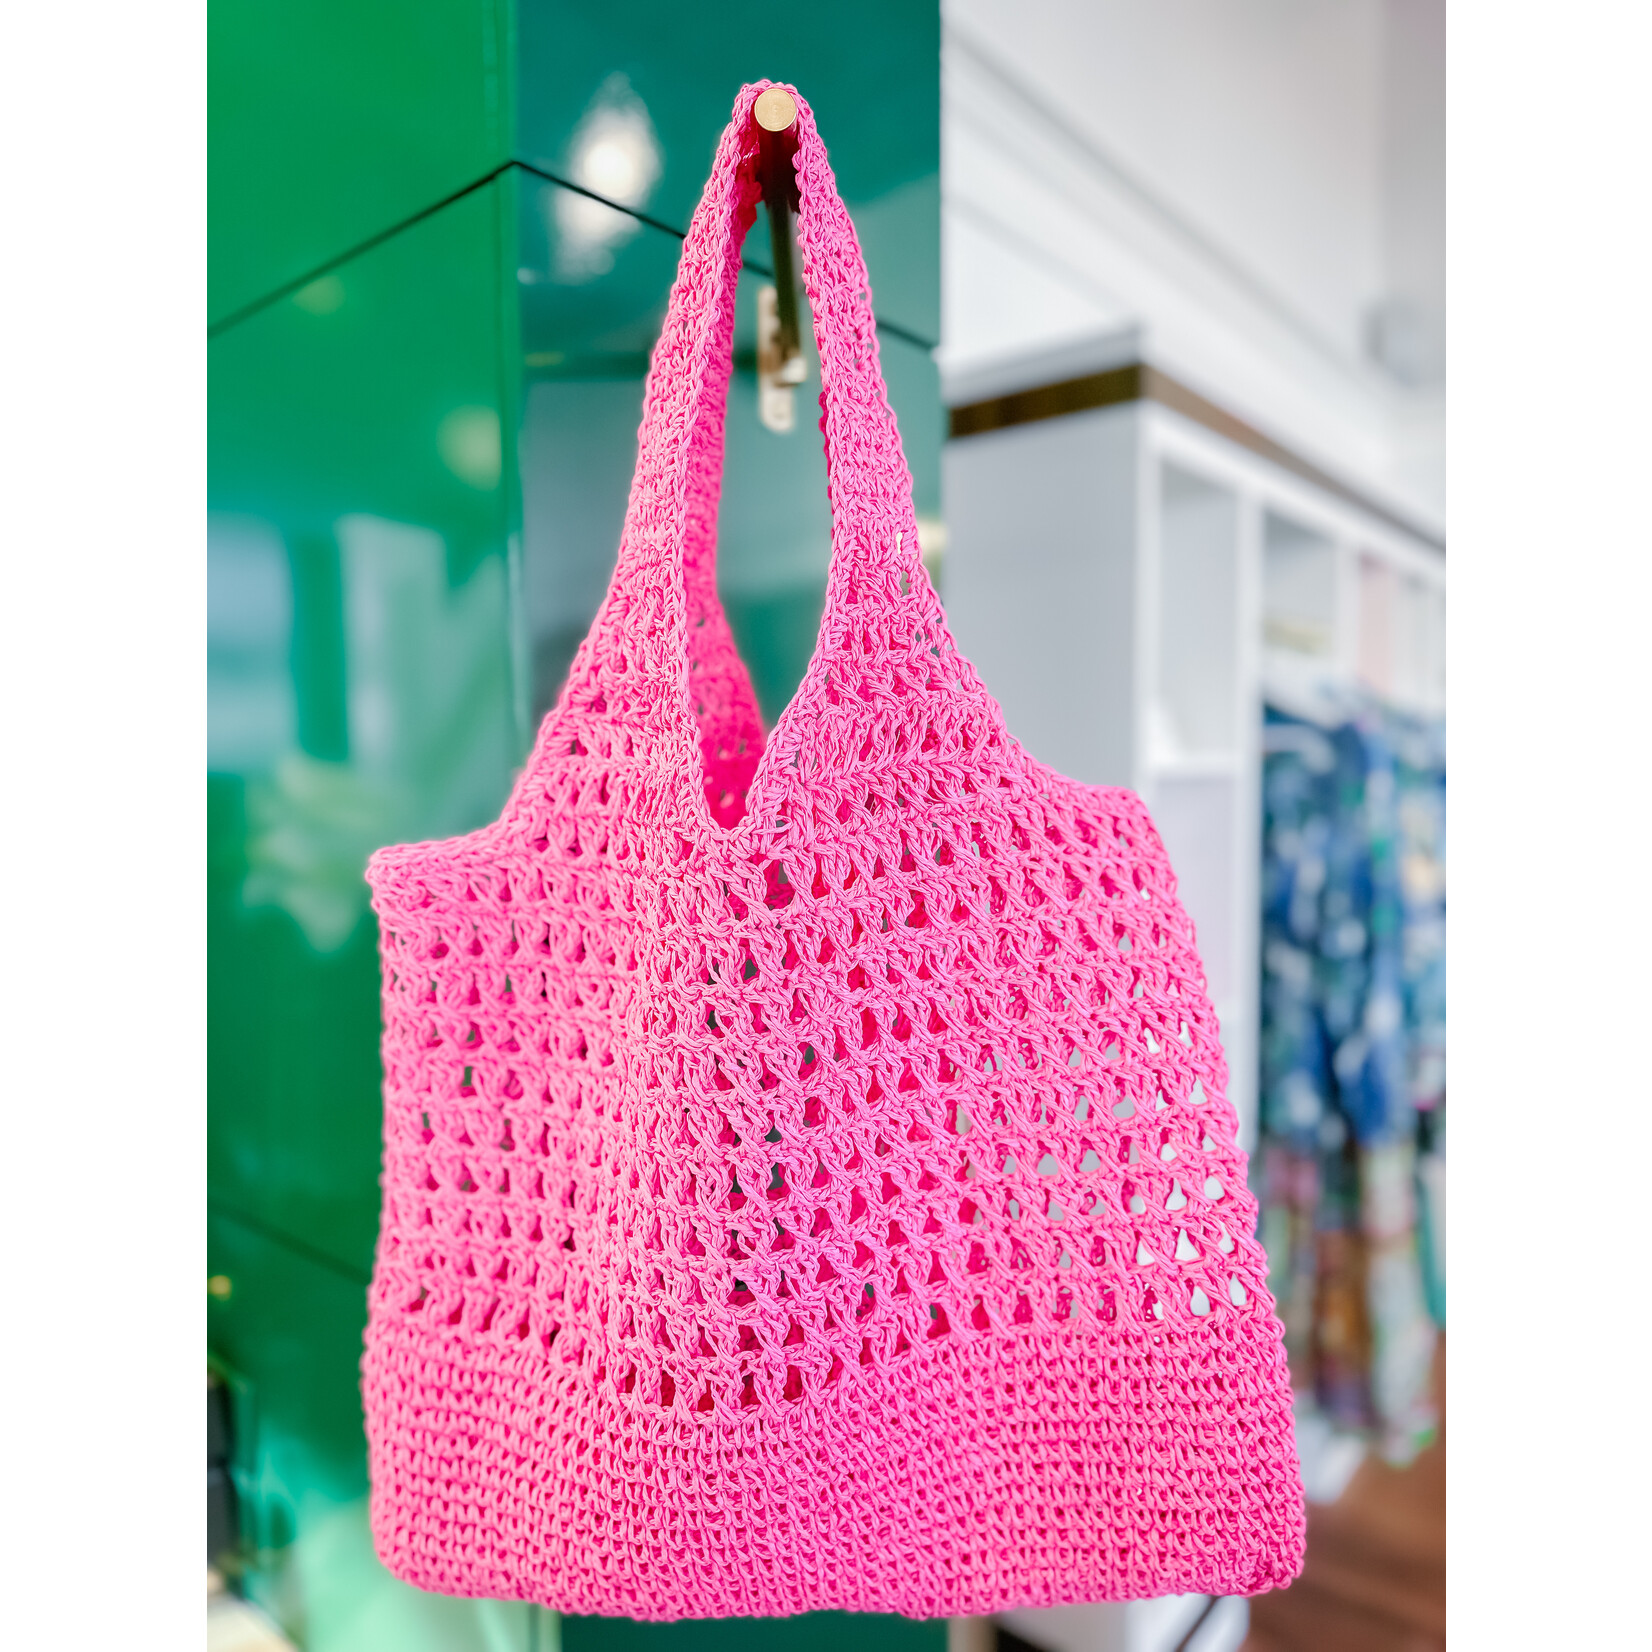 The Fashion Crochet Bag W/Pouch